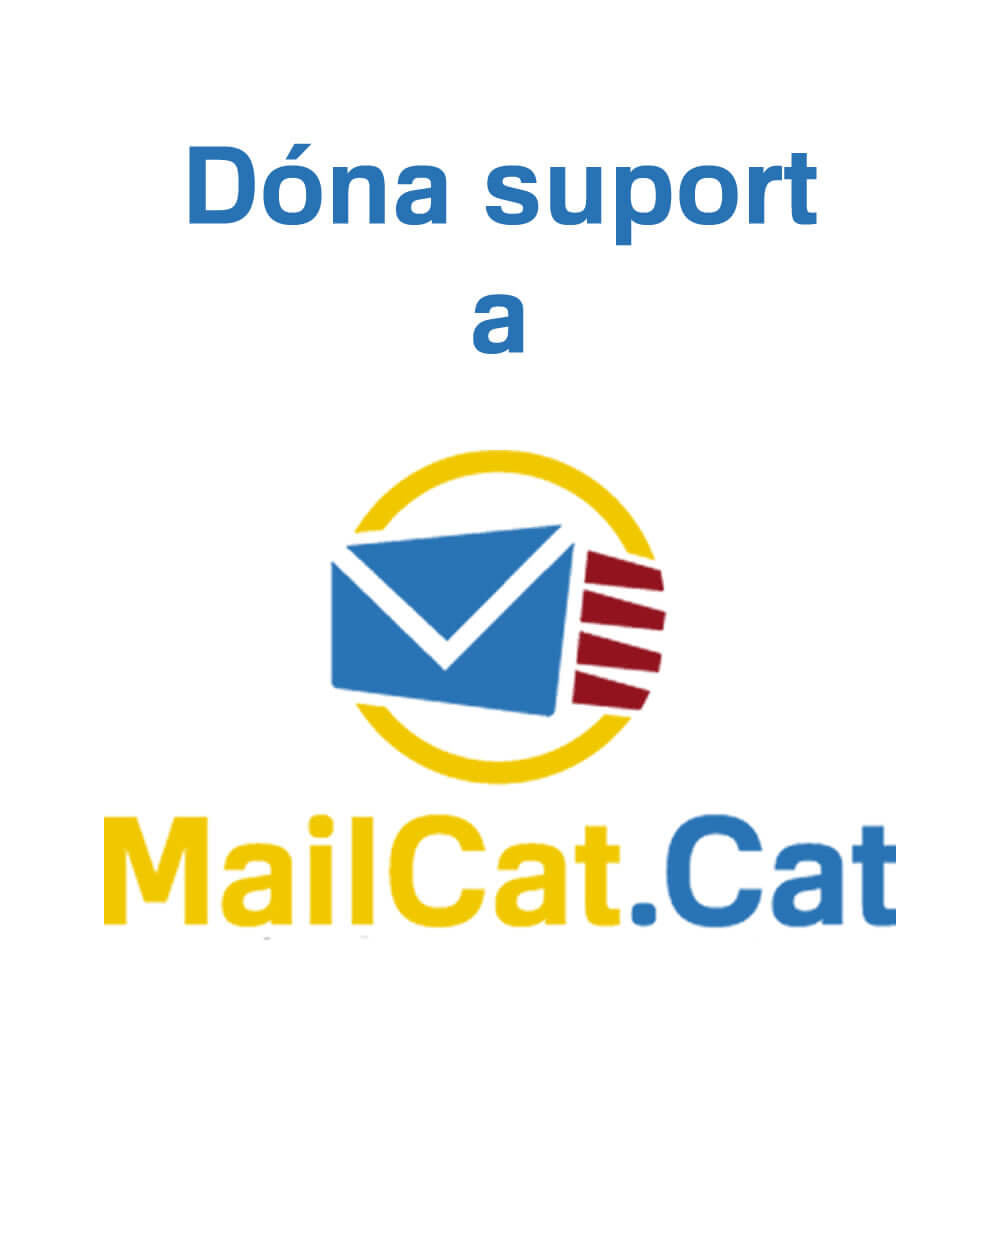 Dóna suport i ajuda a MailCat.Cat